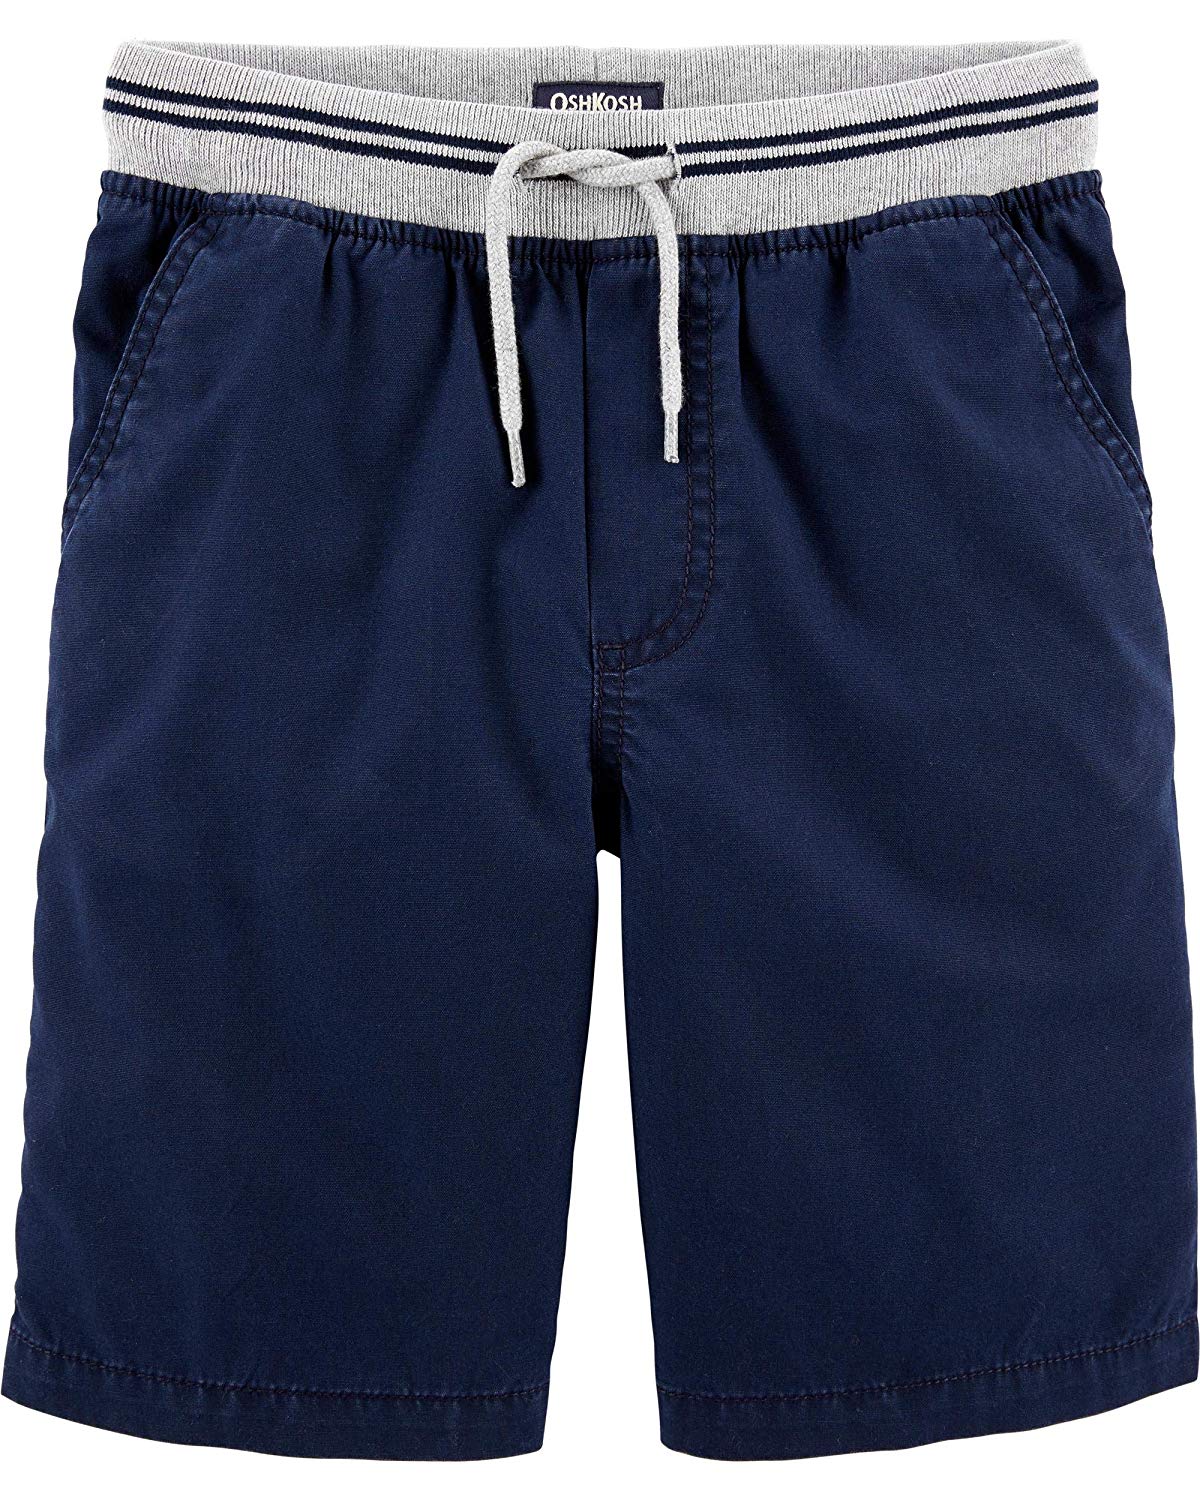 Oshkosh B'Gosh Boys Pull-On Shorts